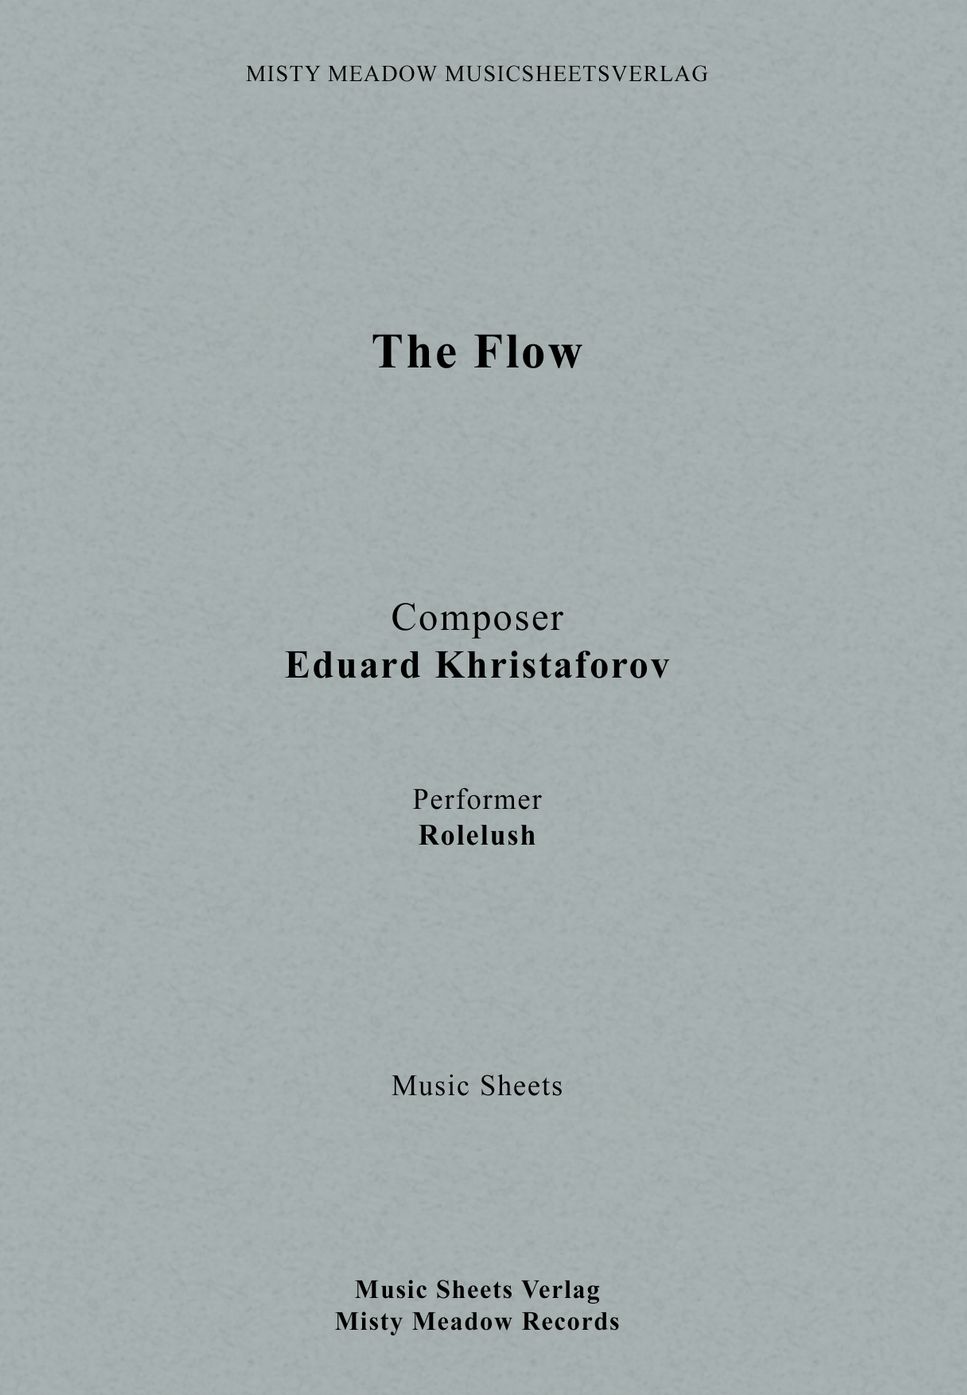 Eduard Khristaforov (Rolelush) - The Flow (Piano composition)